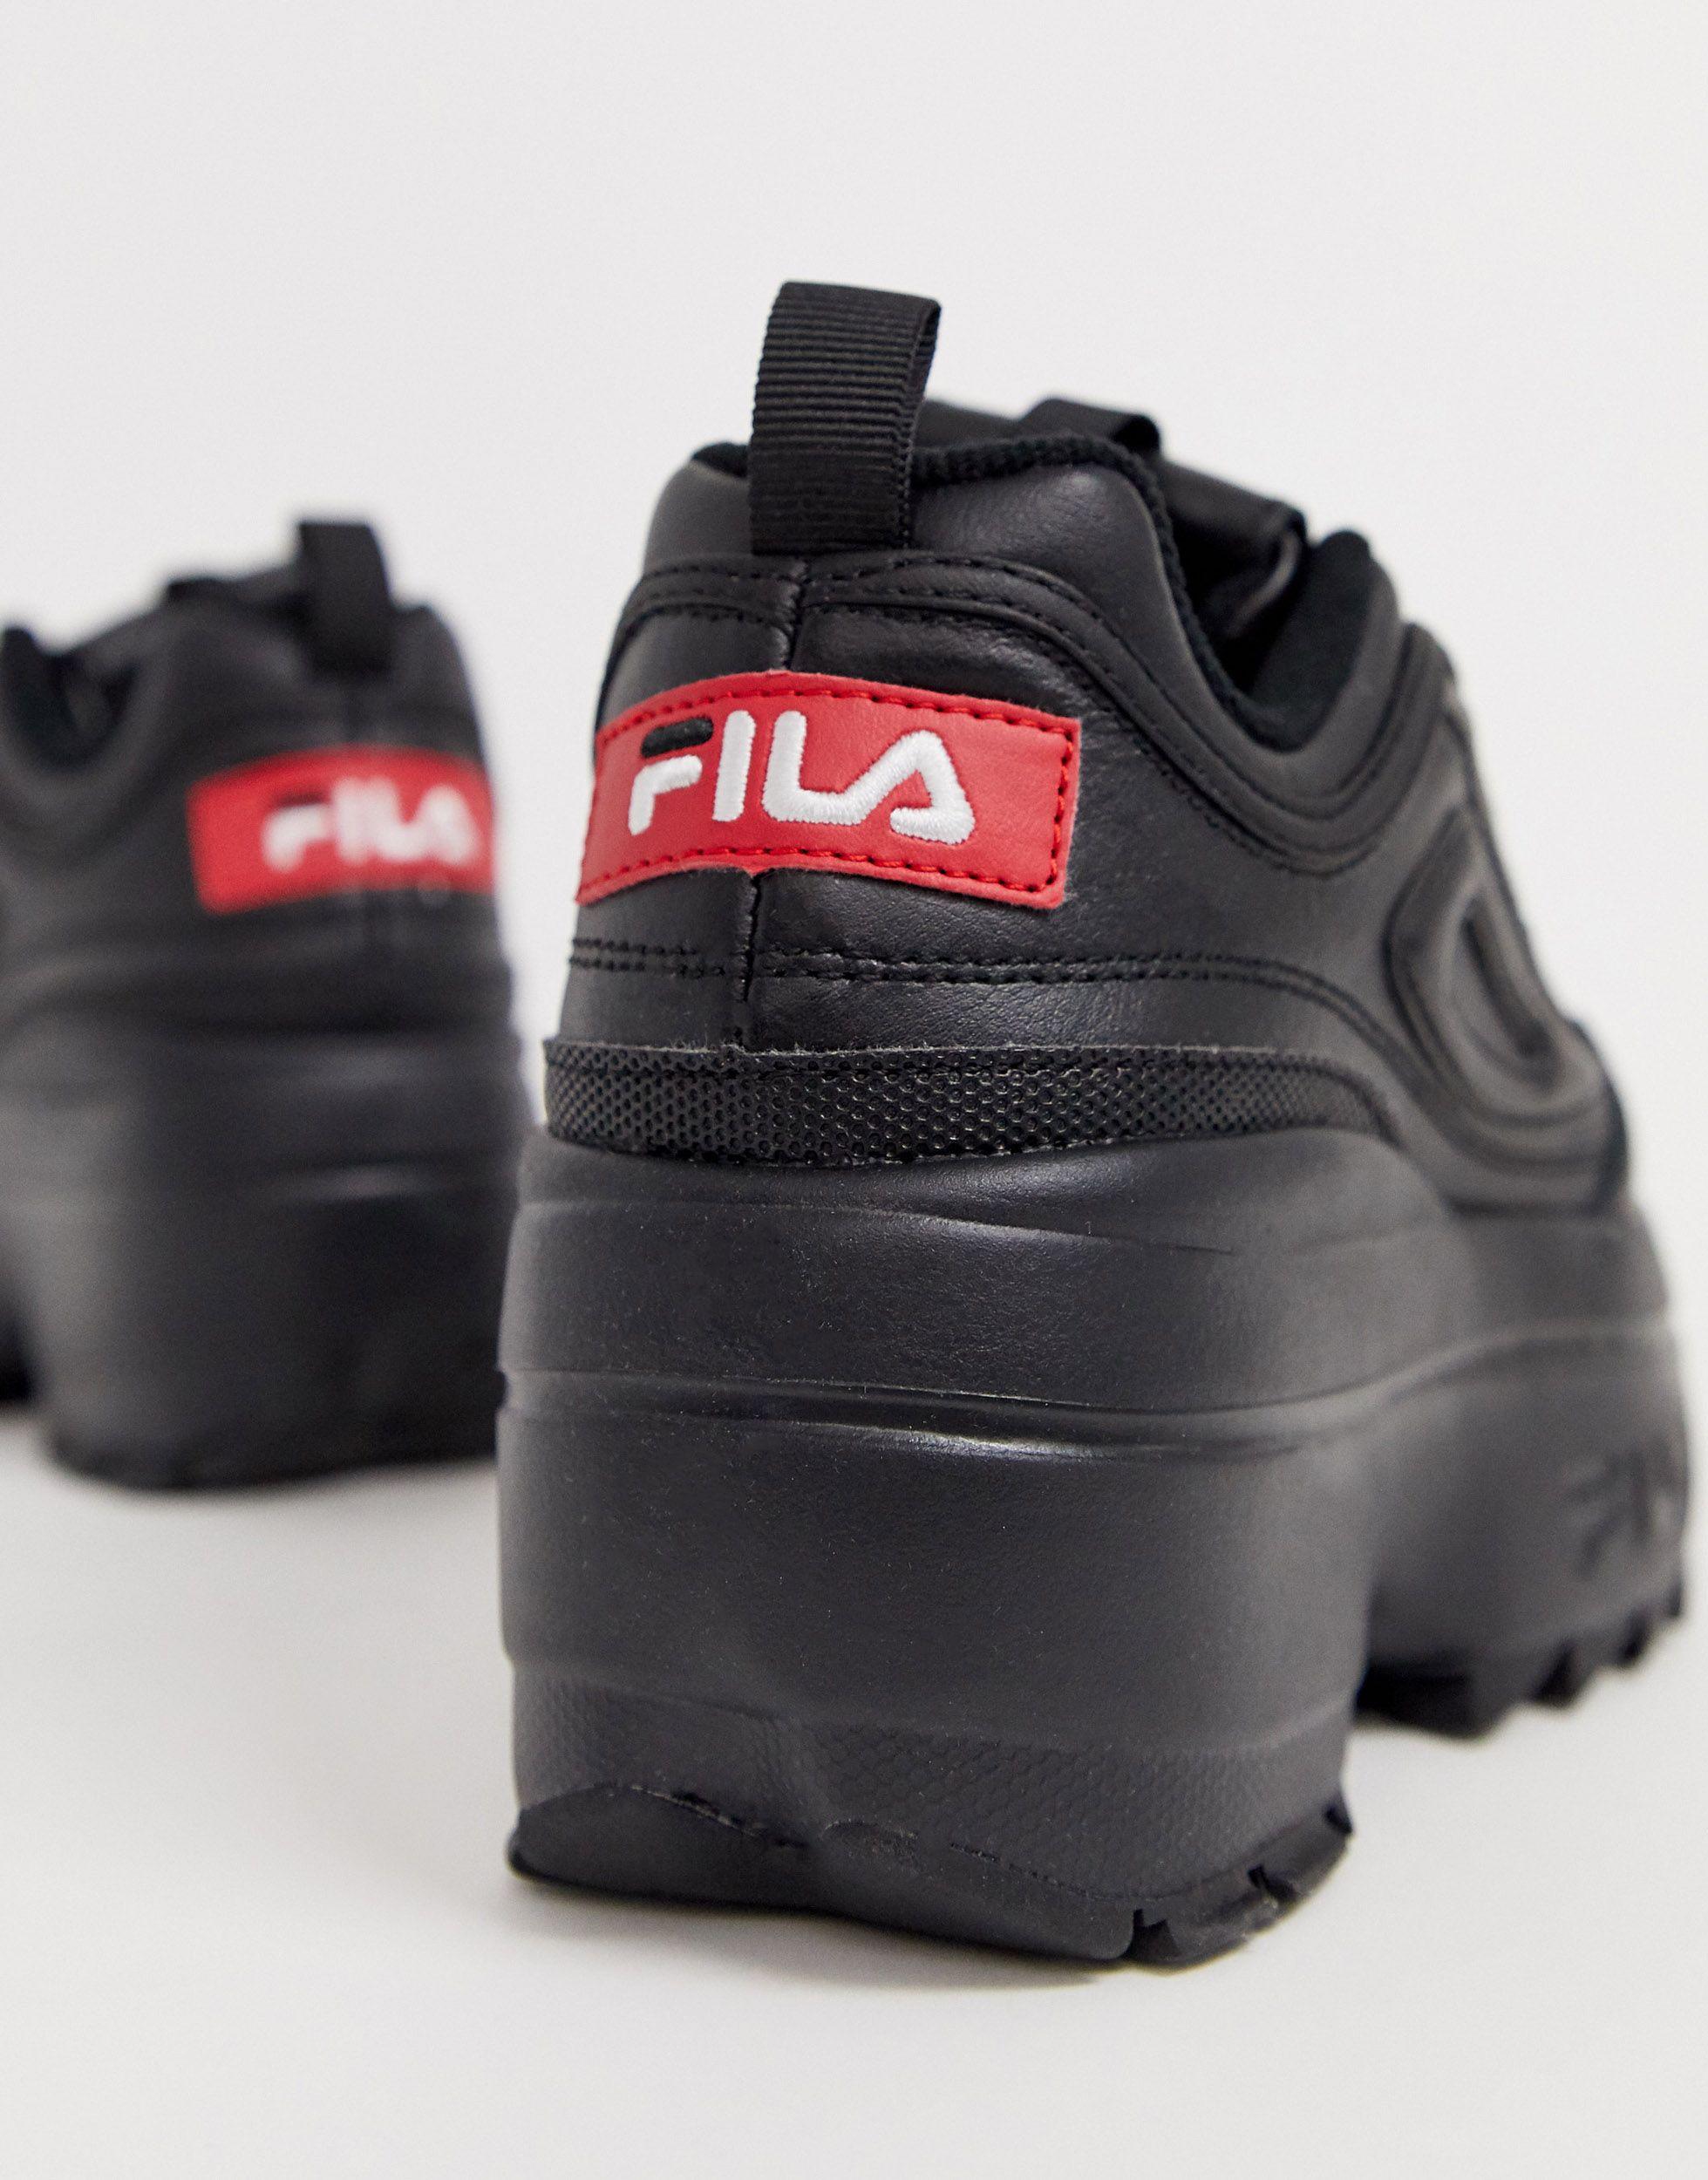 Fila Leather Disruptor Ii Platform Wedge Trainers in Black | Lyst